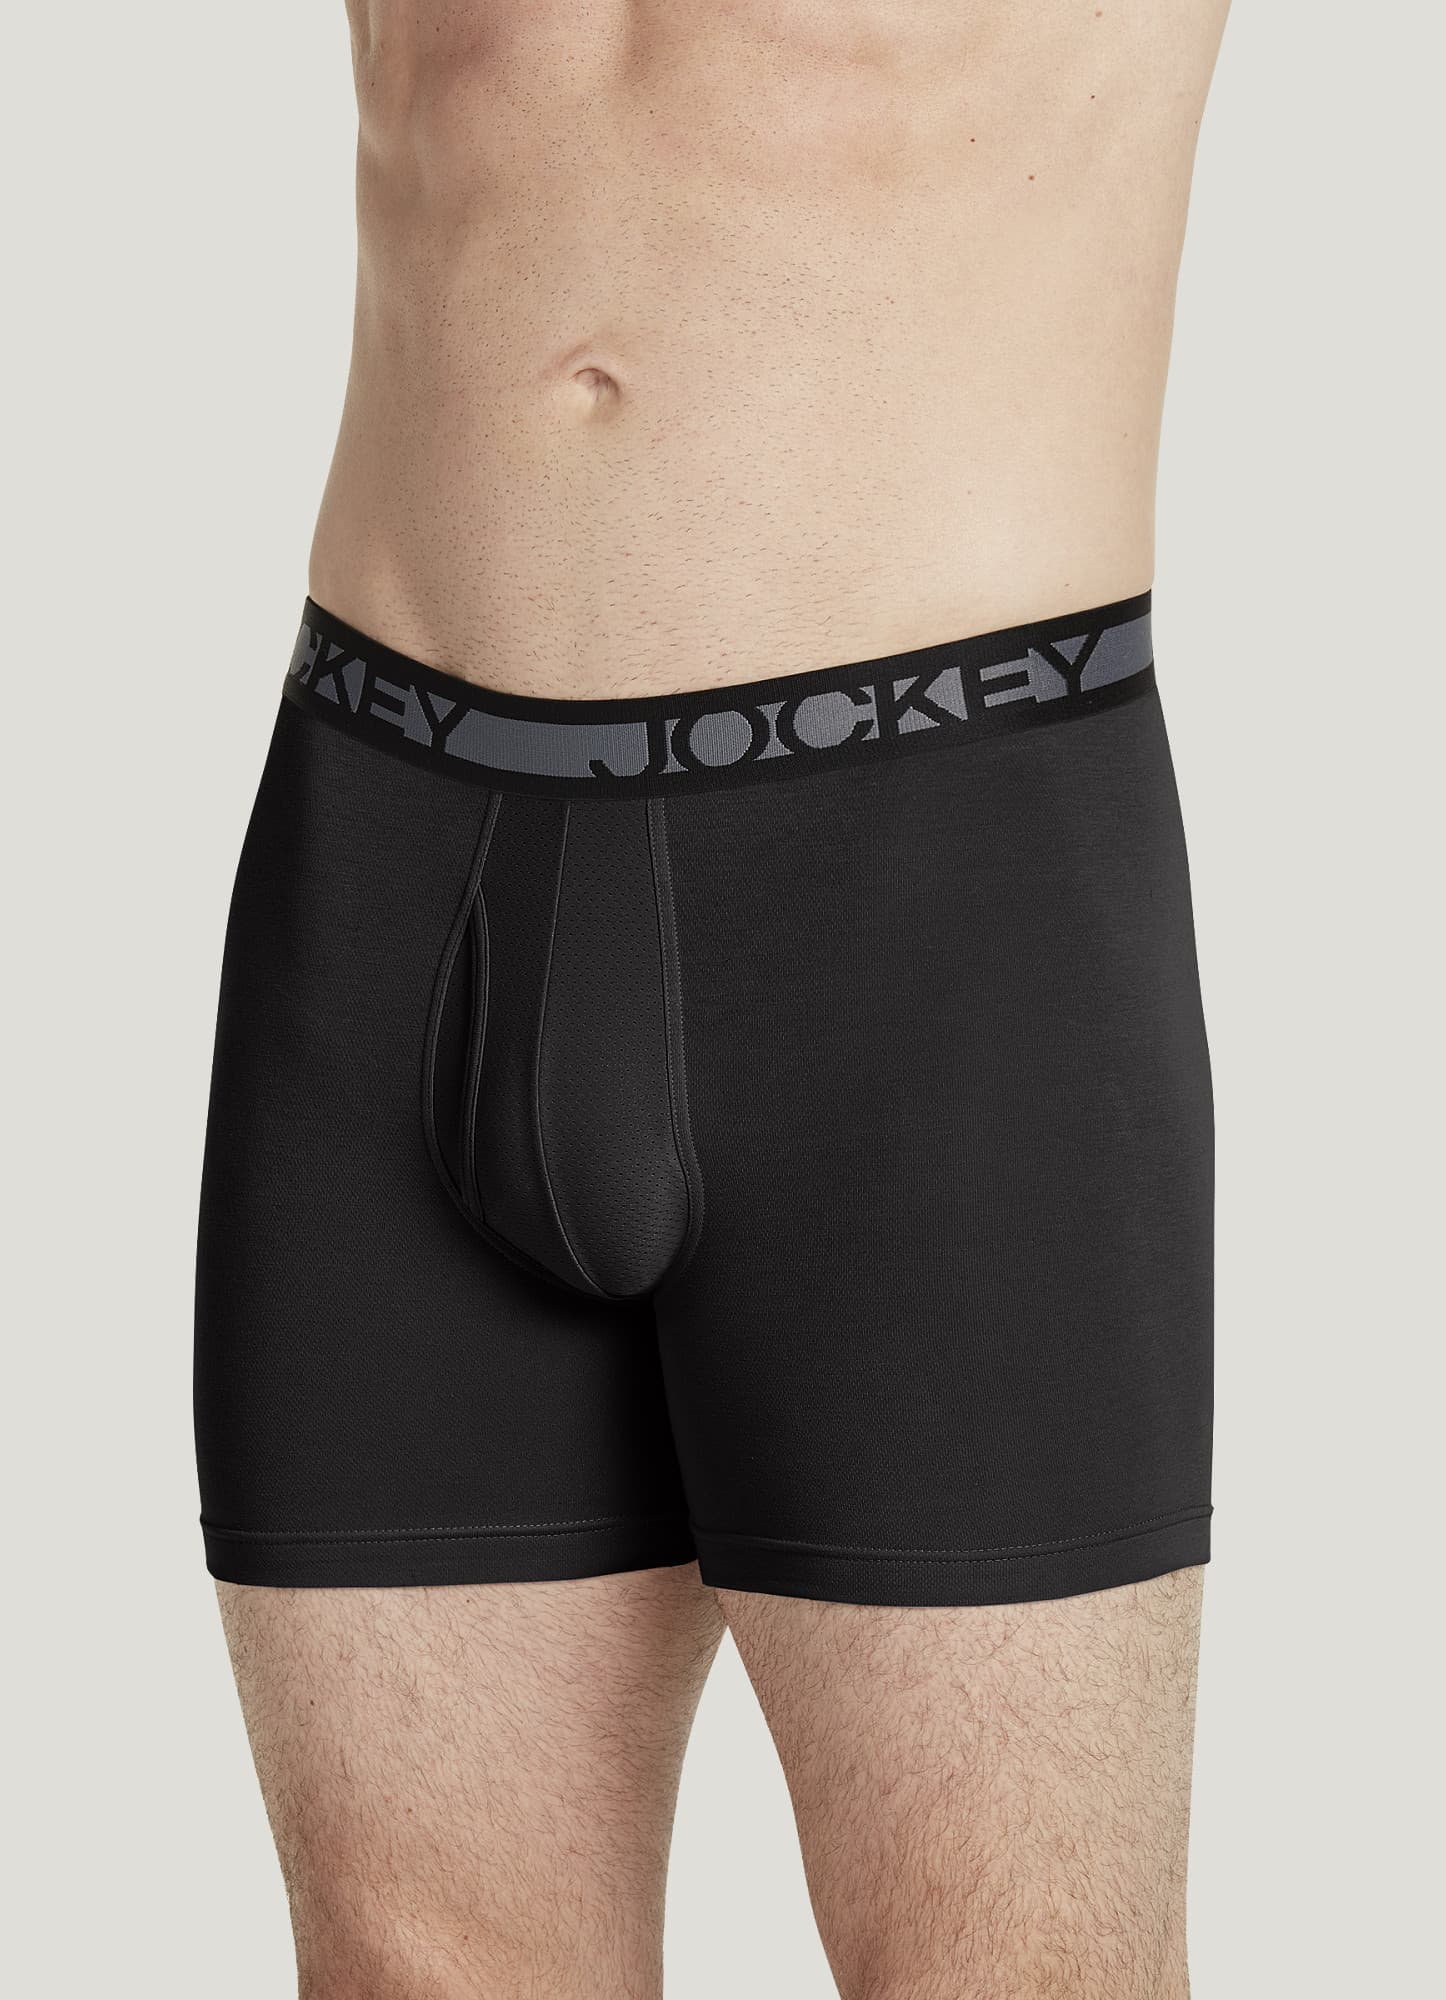 De Jagers - --Wide range of men's Jockey underwear available